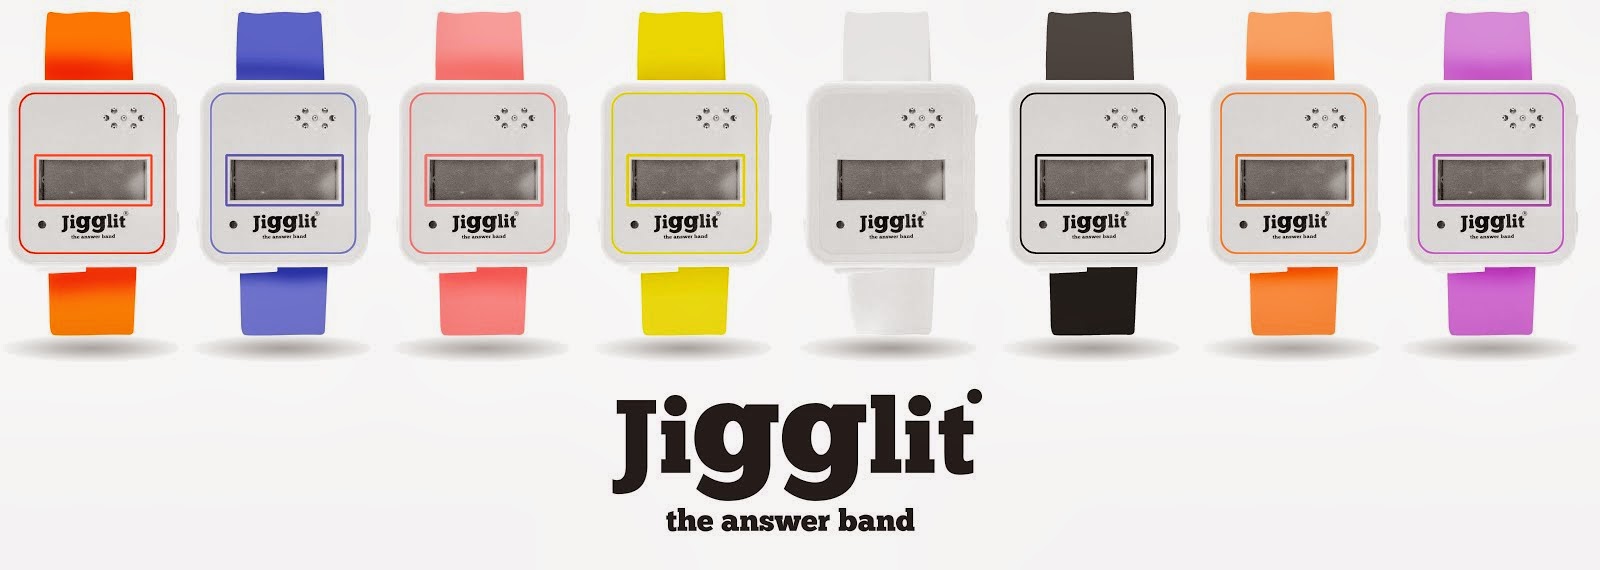 Jigglit - The Answer Band